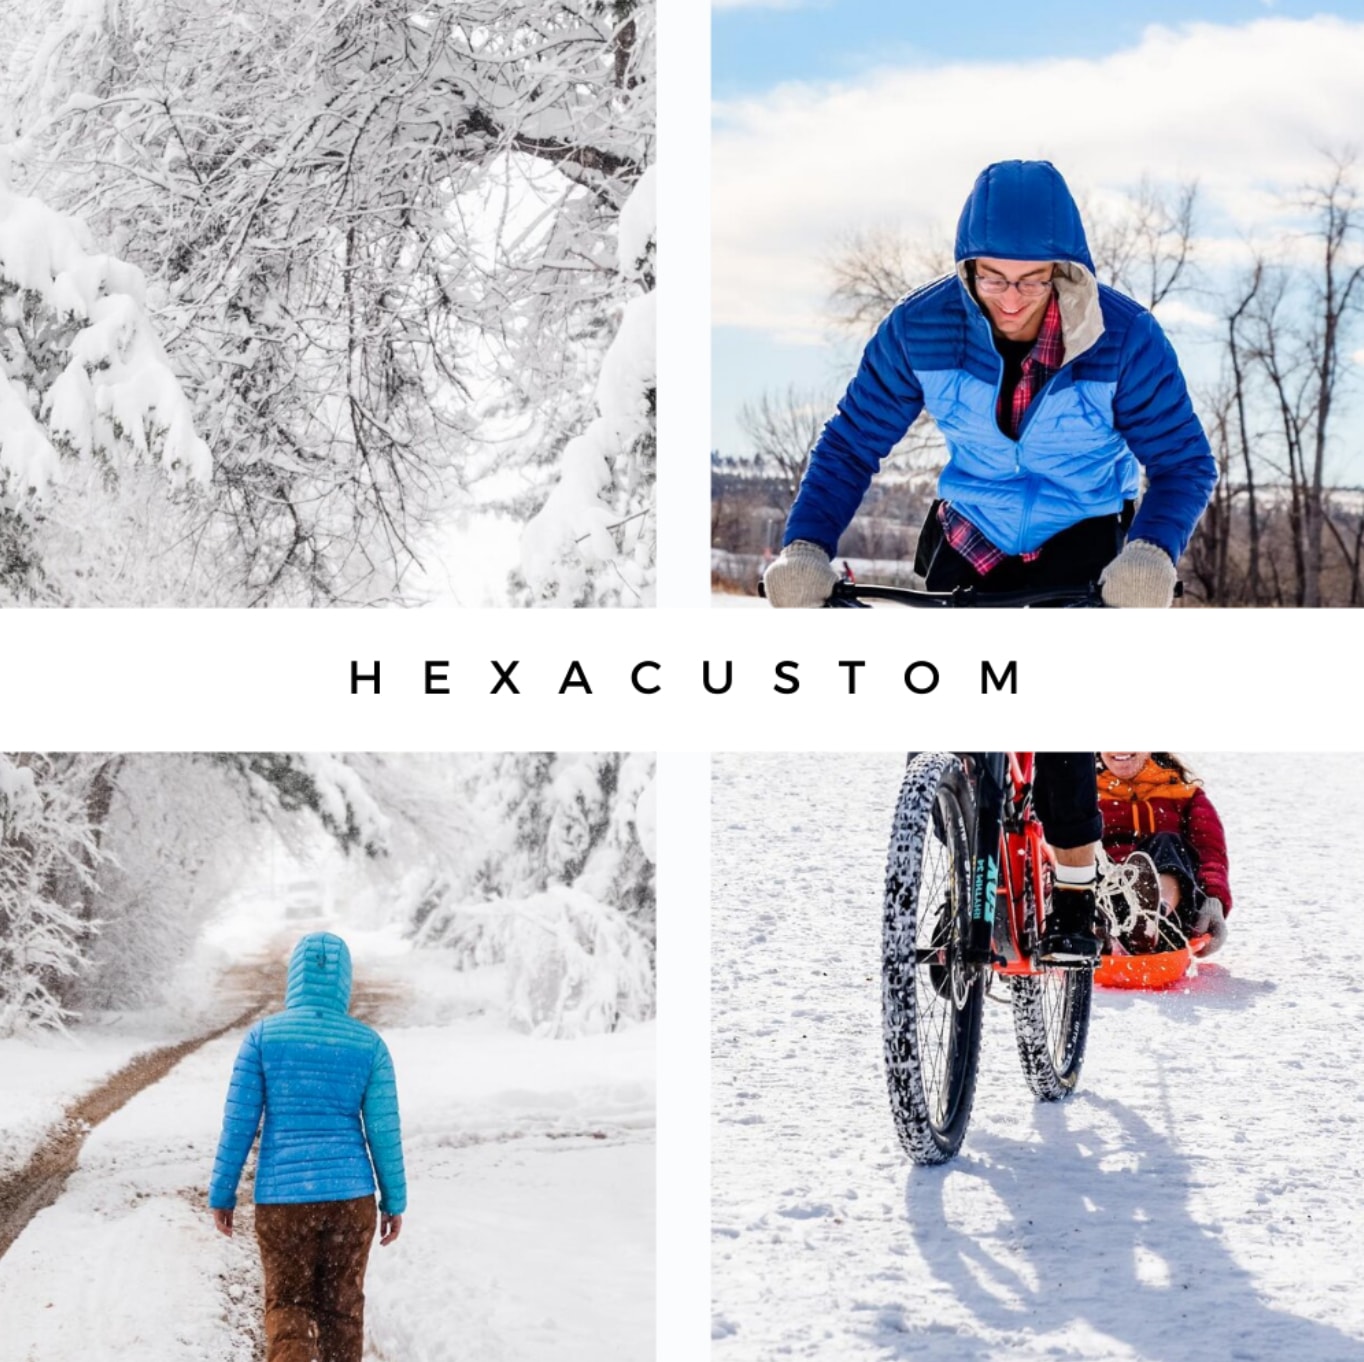 Hexa custom